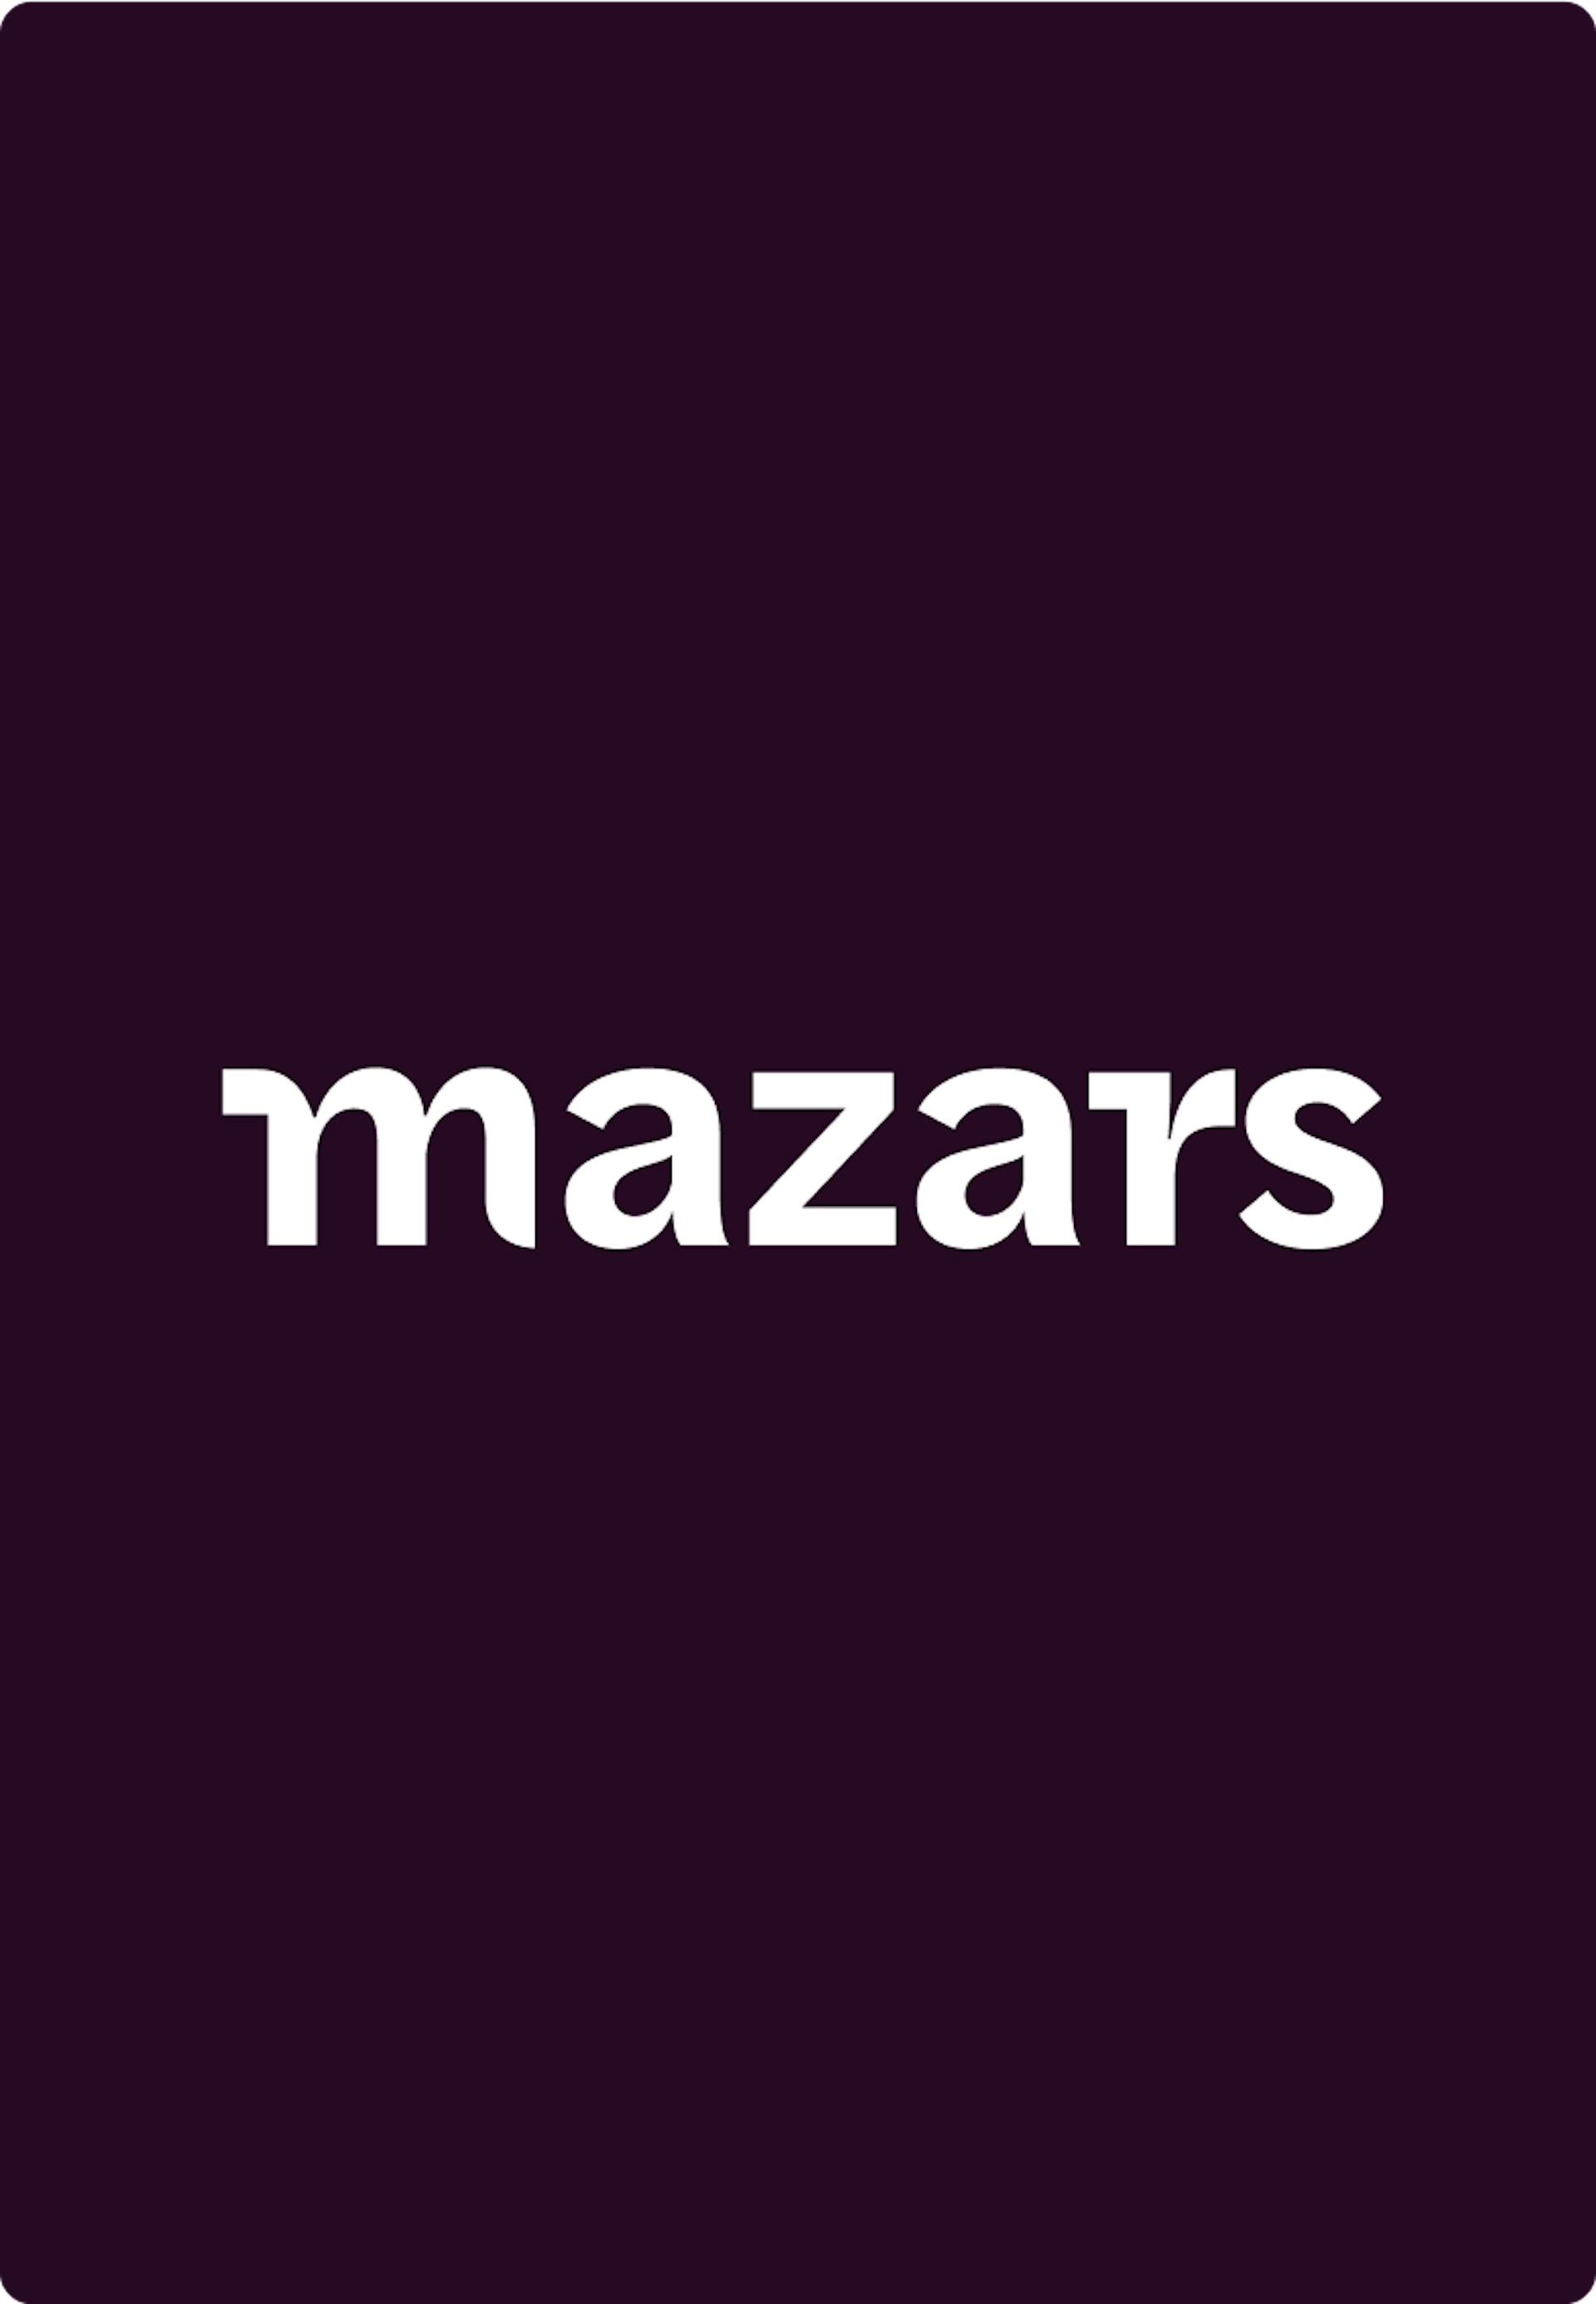 Logo mazars